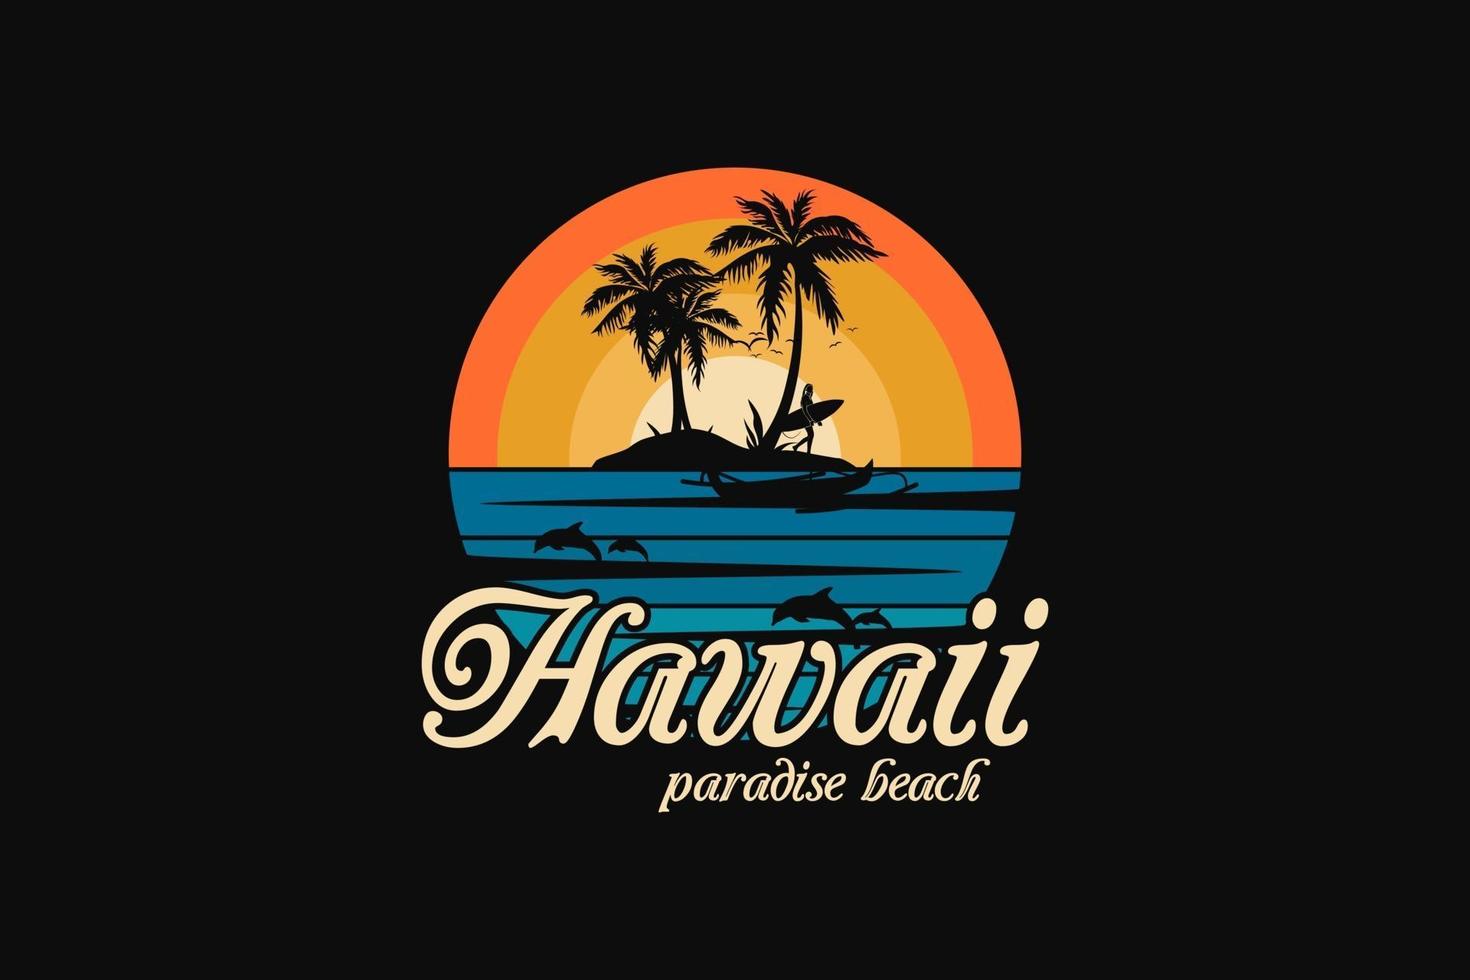 hawaii paradise beach, v beach vetor